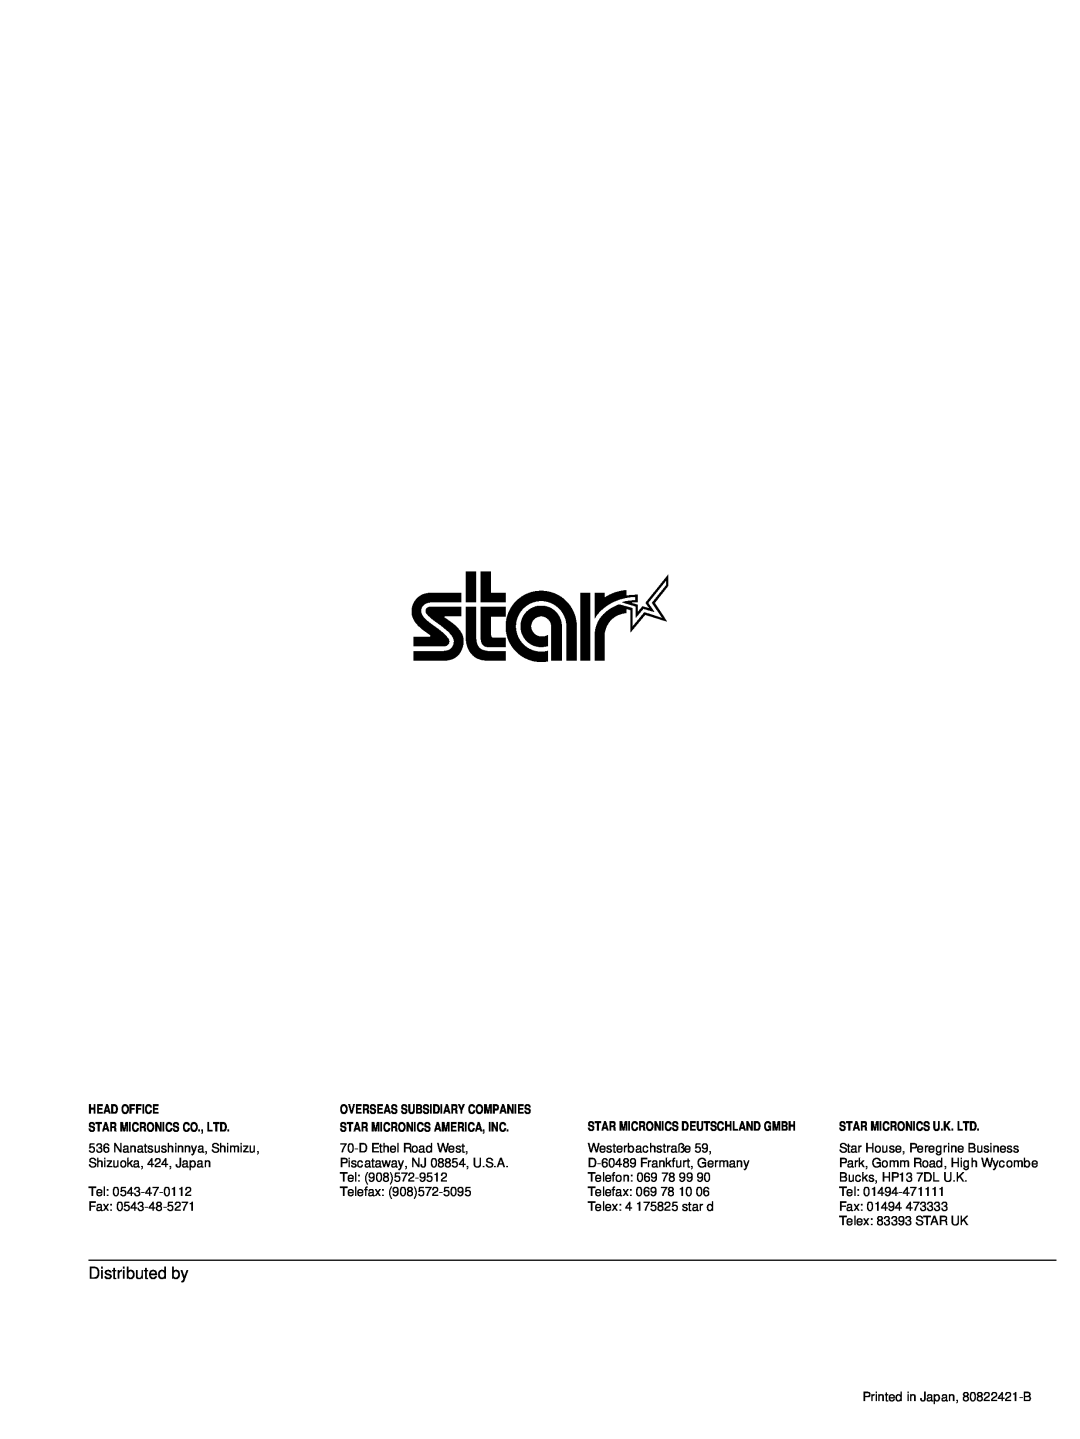 Star Micronics TSP400 Distributed by, Head Office, Overseas Subsidiary Companies, Star Micronics America, Inc 